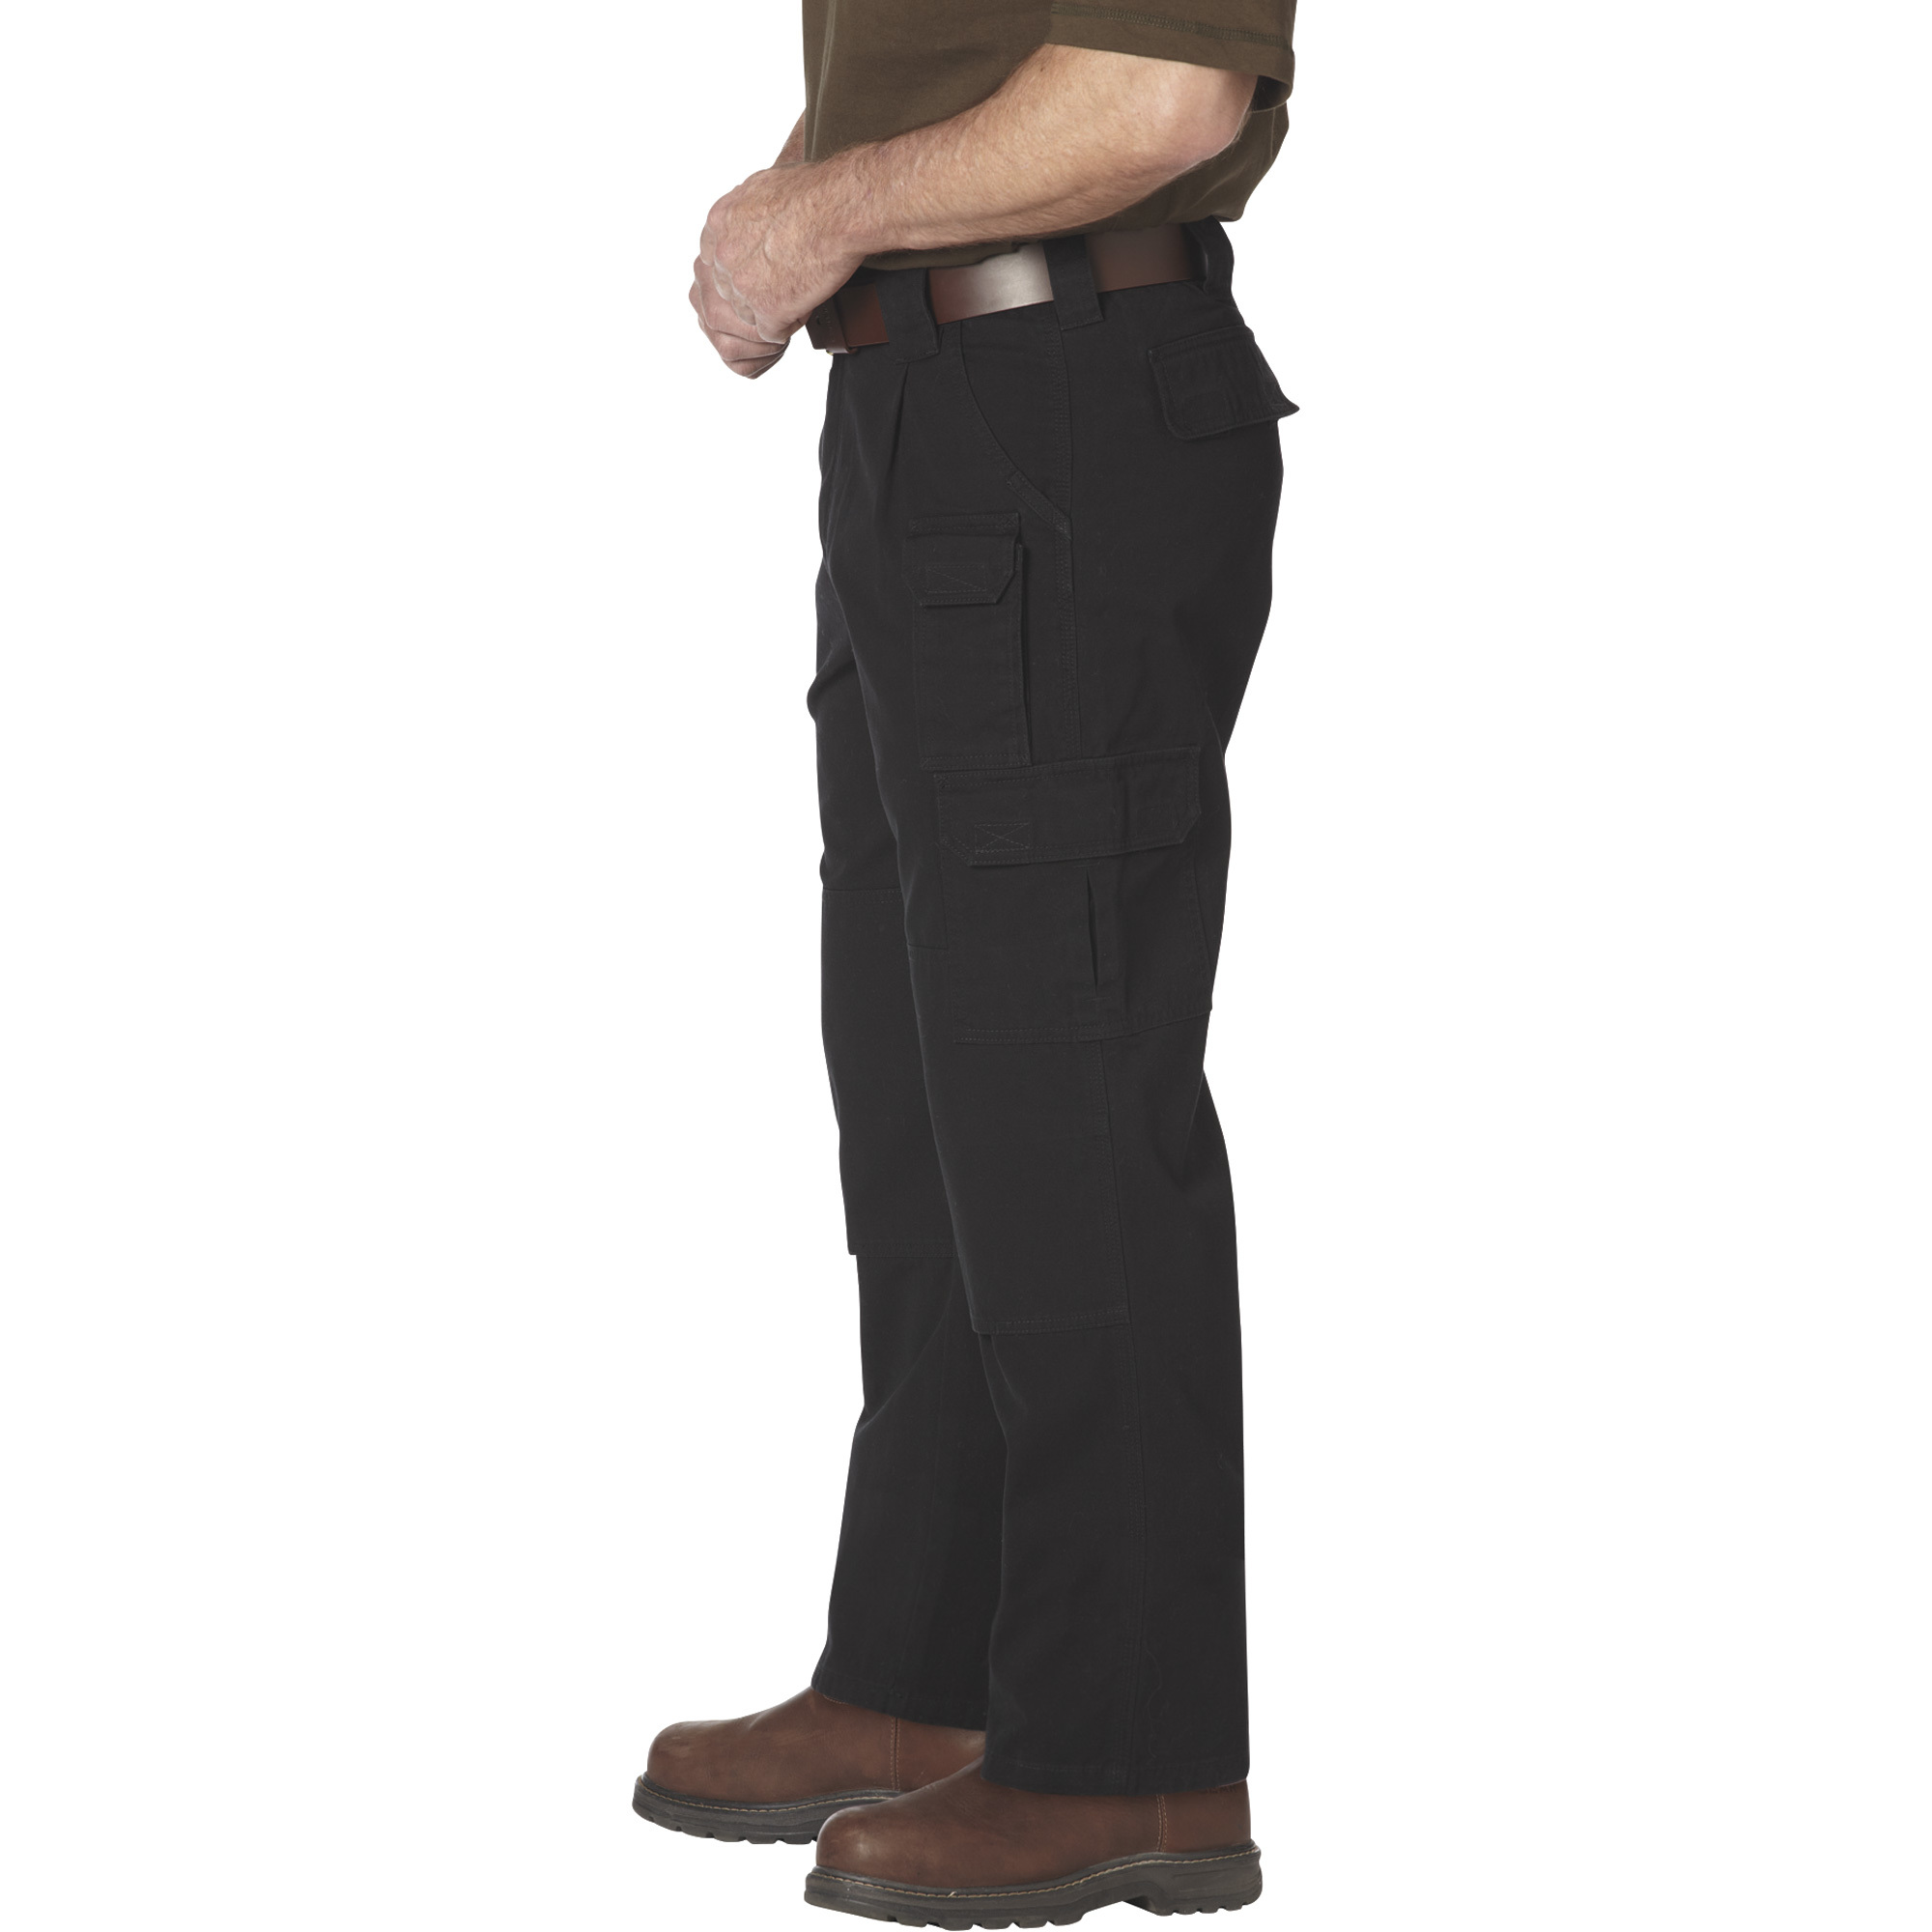 Gravel Gear Men's 7-Pocket Tactical Pants with Teflon - Black, 42Inch Waist x 32Inch Inseam